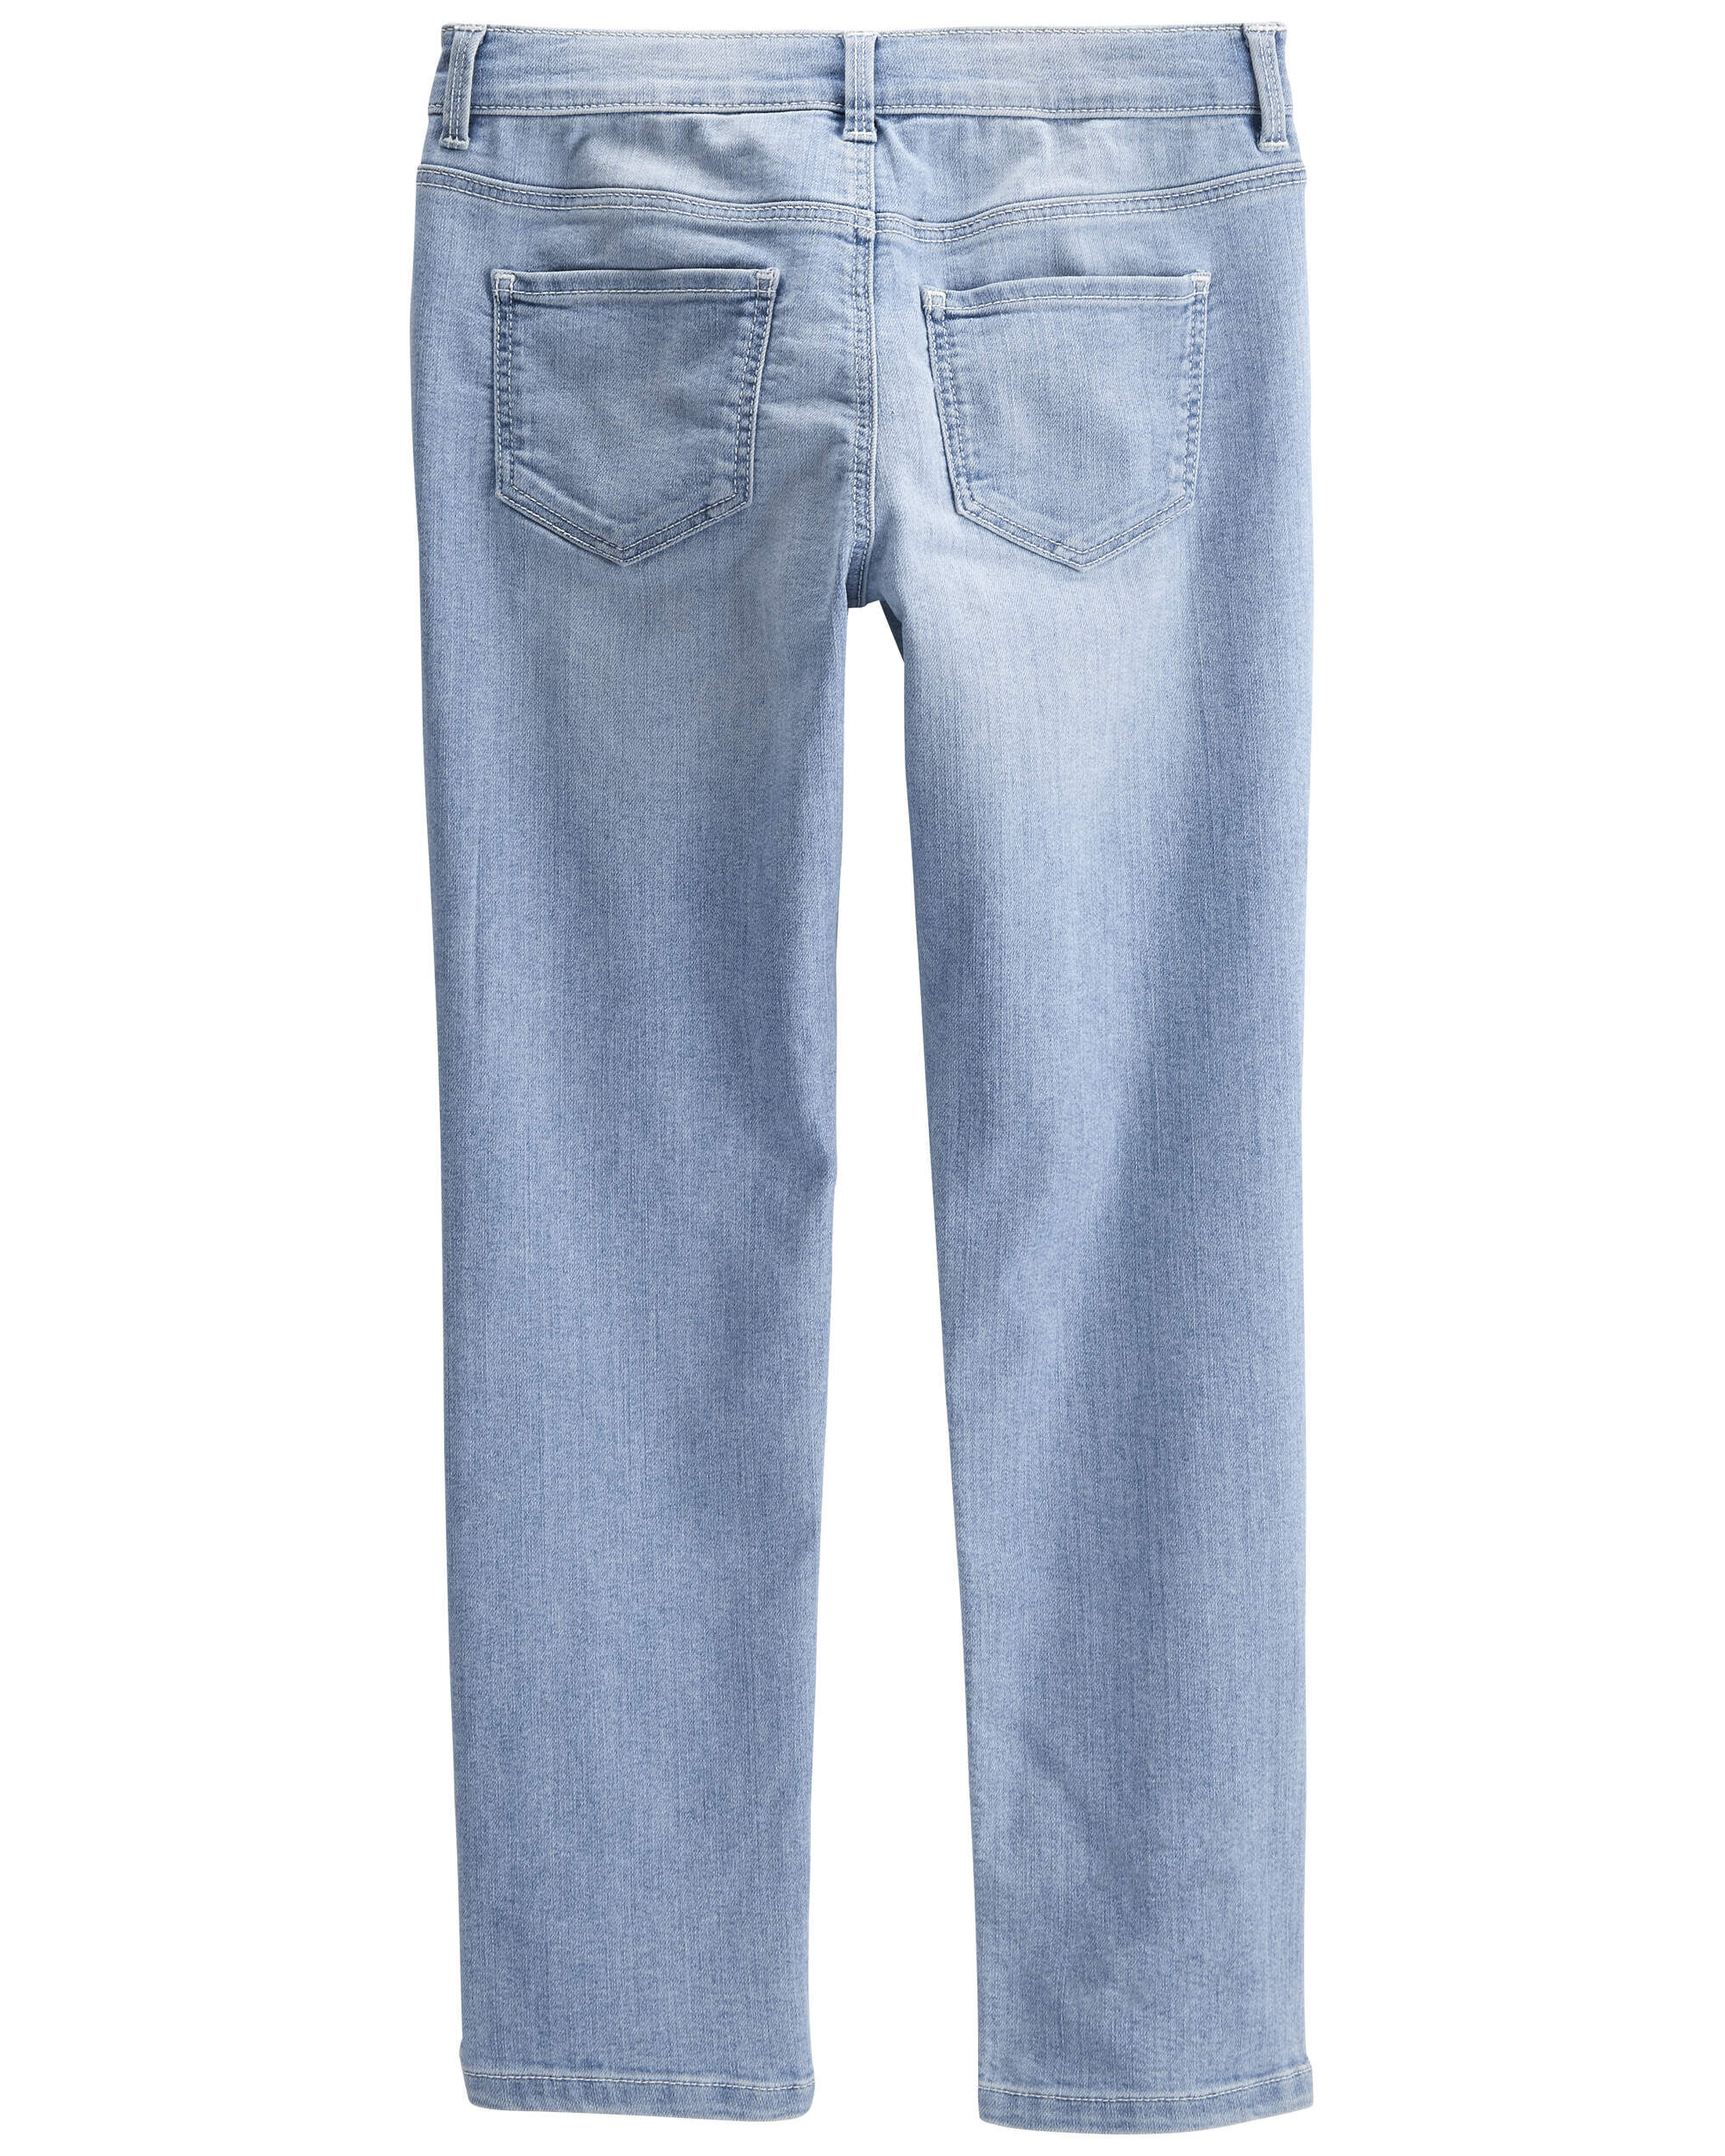 Super Skinny Jeans for Girls Blue OshKosh BGosh 2Y-5Y Marine Blue Wash 